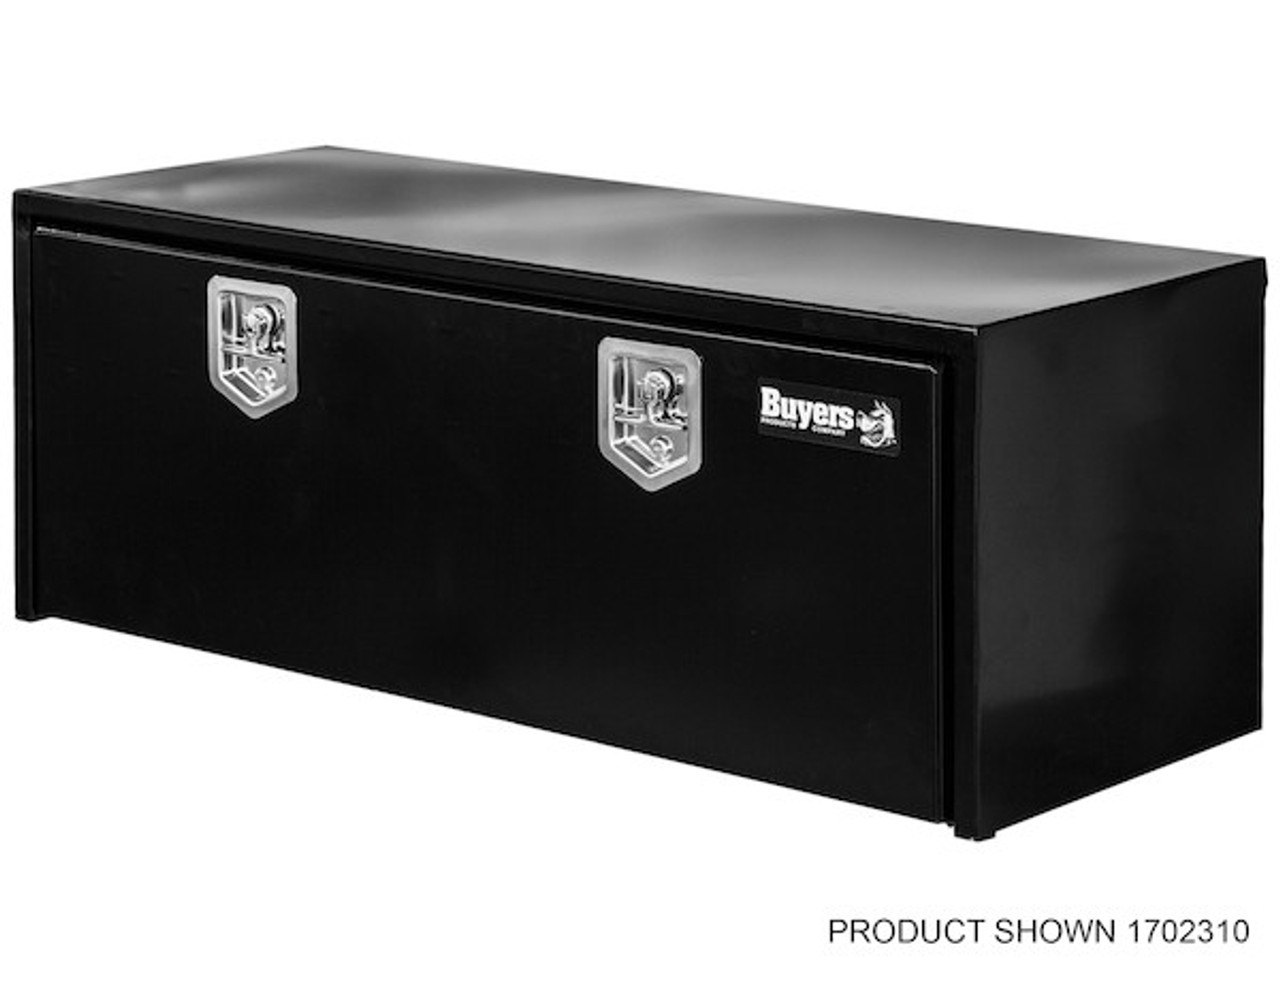 1703353 - 14x12x30 Inch Black Steel Underbody Truck Box with T-Handle